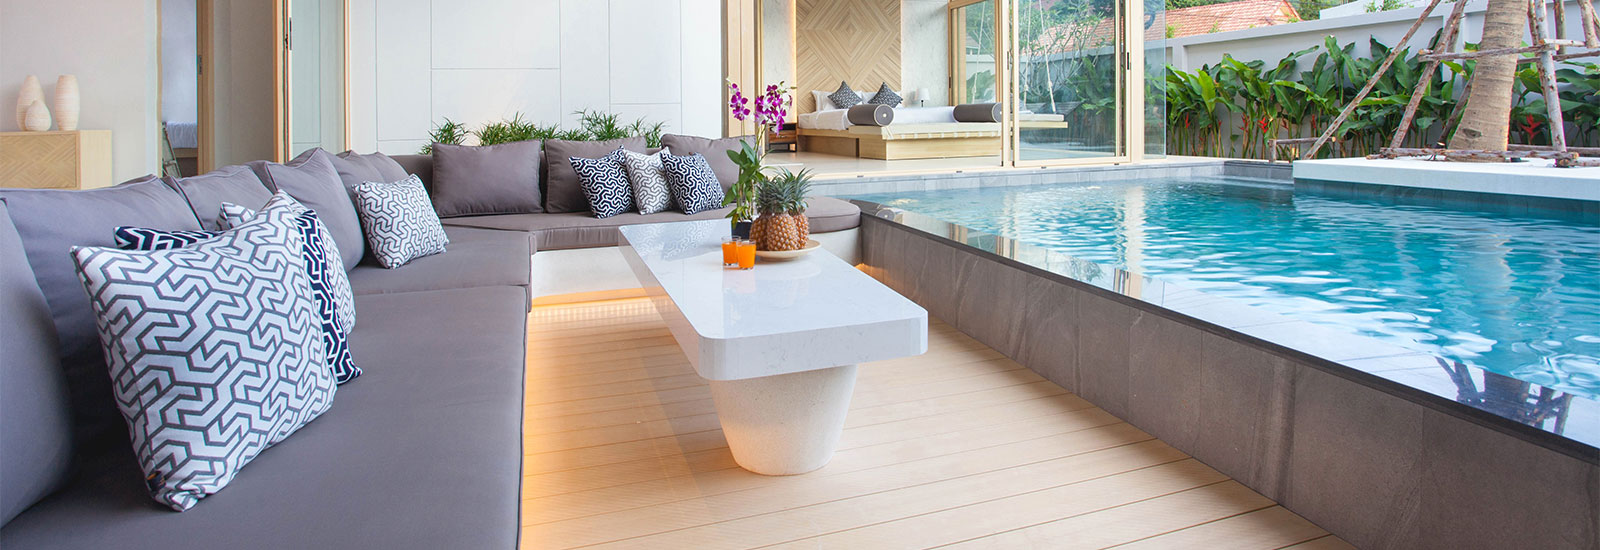 Modern Home Patio with Swiming Pool